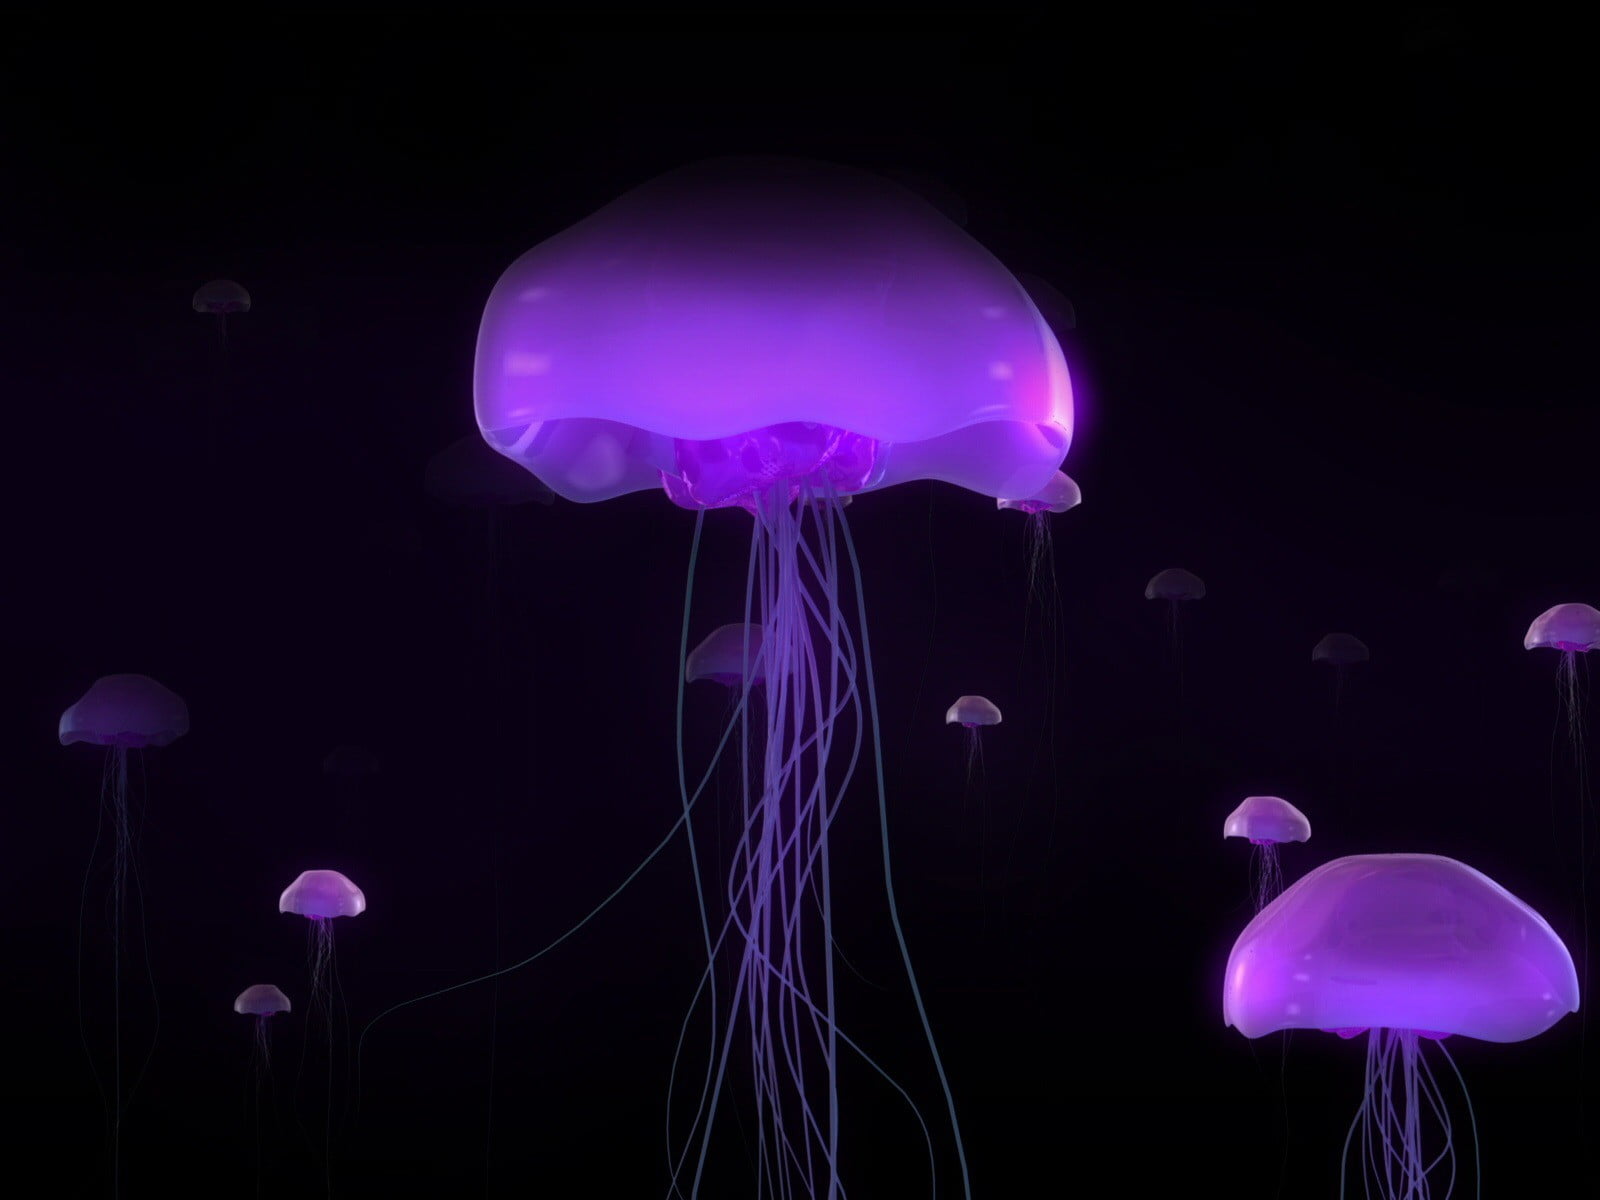 purple jelly fish lot, Medusa, jellyfish, no people, motion, black background